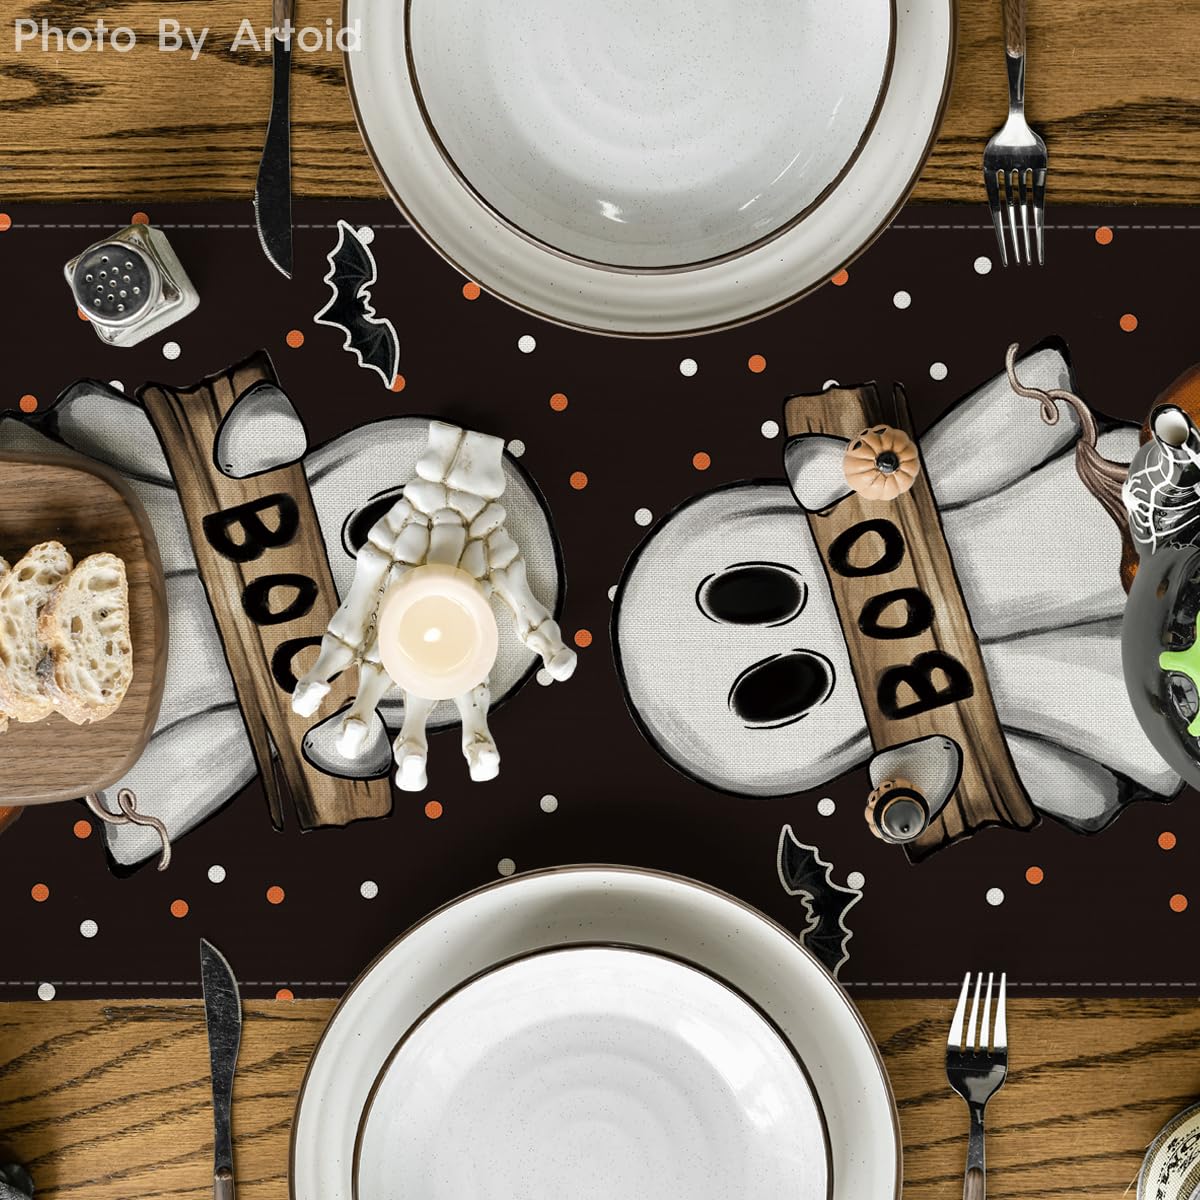 Artoid Mode Polka Dot Ghost Pumpkin Cat Boo Halloween Table Runner, Bat Seasonal Fall Kitchen Dining Table Decoration for Home Party Decor 13x72 Inch